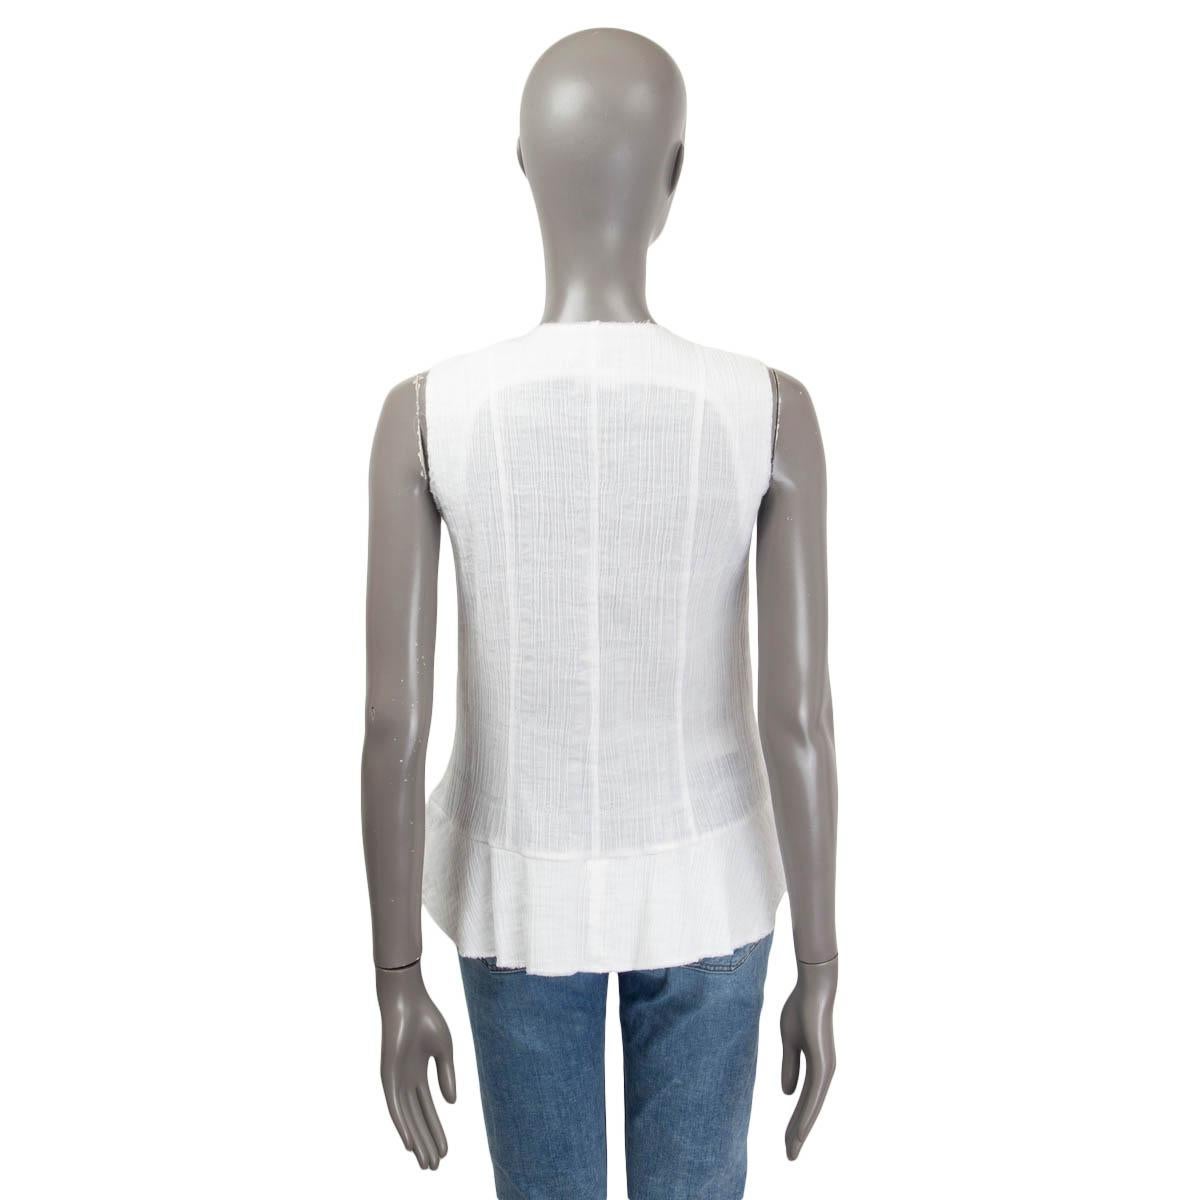 CHANEL white cotton 2012 CRINKLED Sleeveless Blouse Shirt 42 L 1